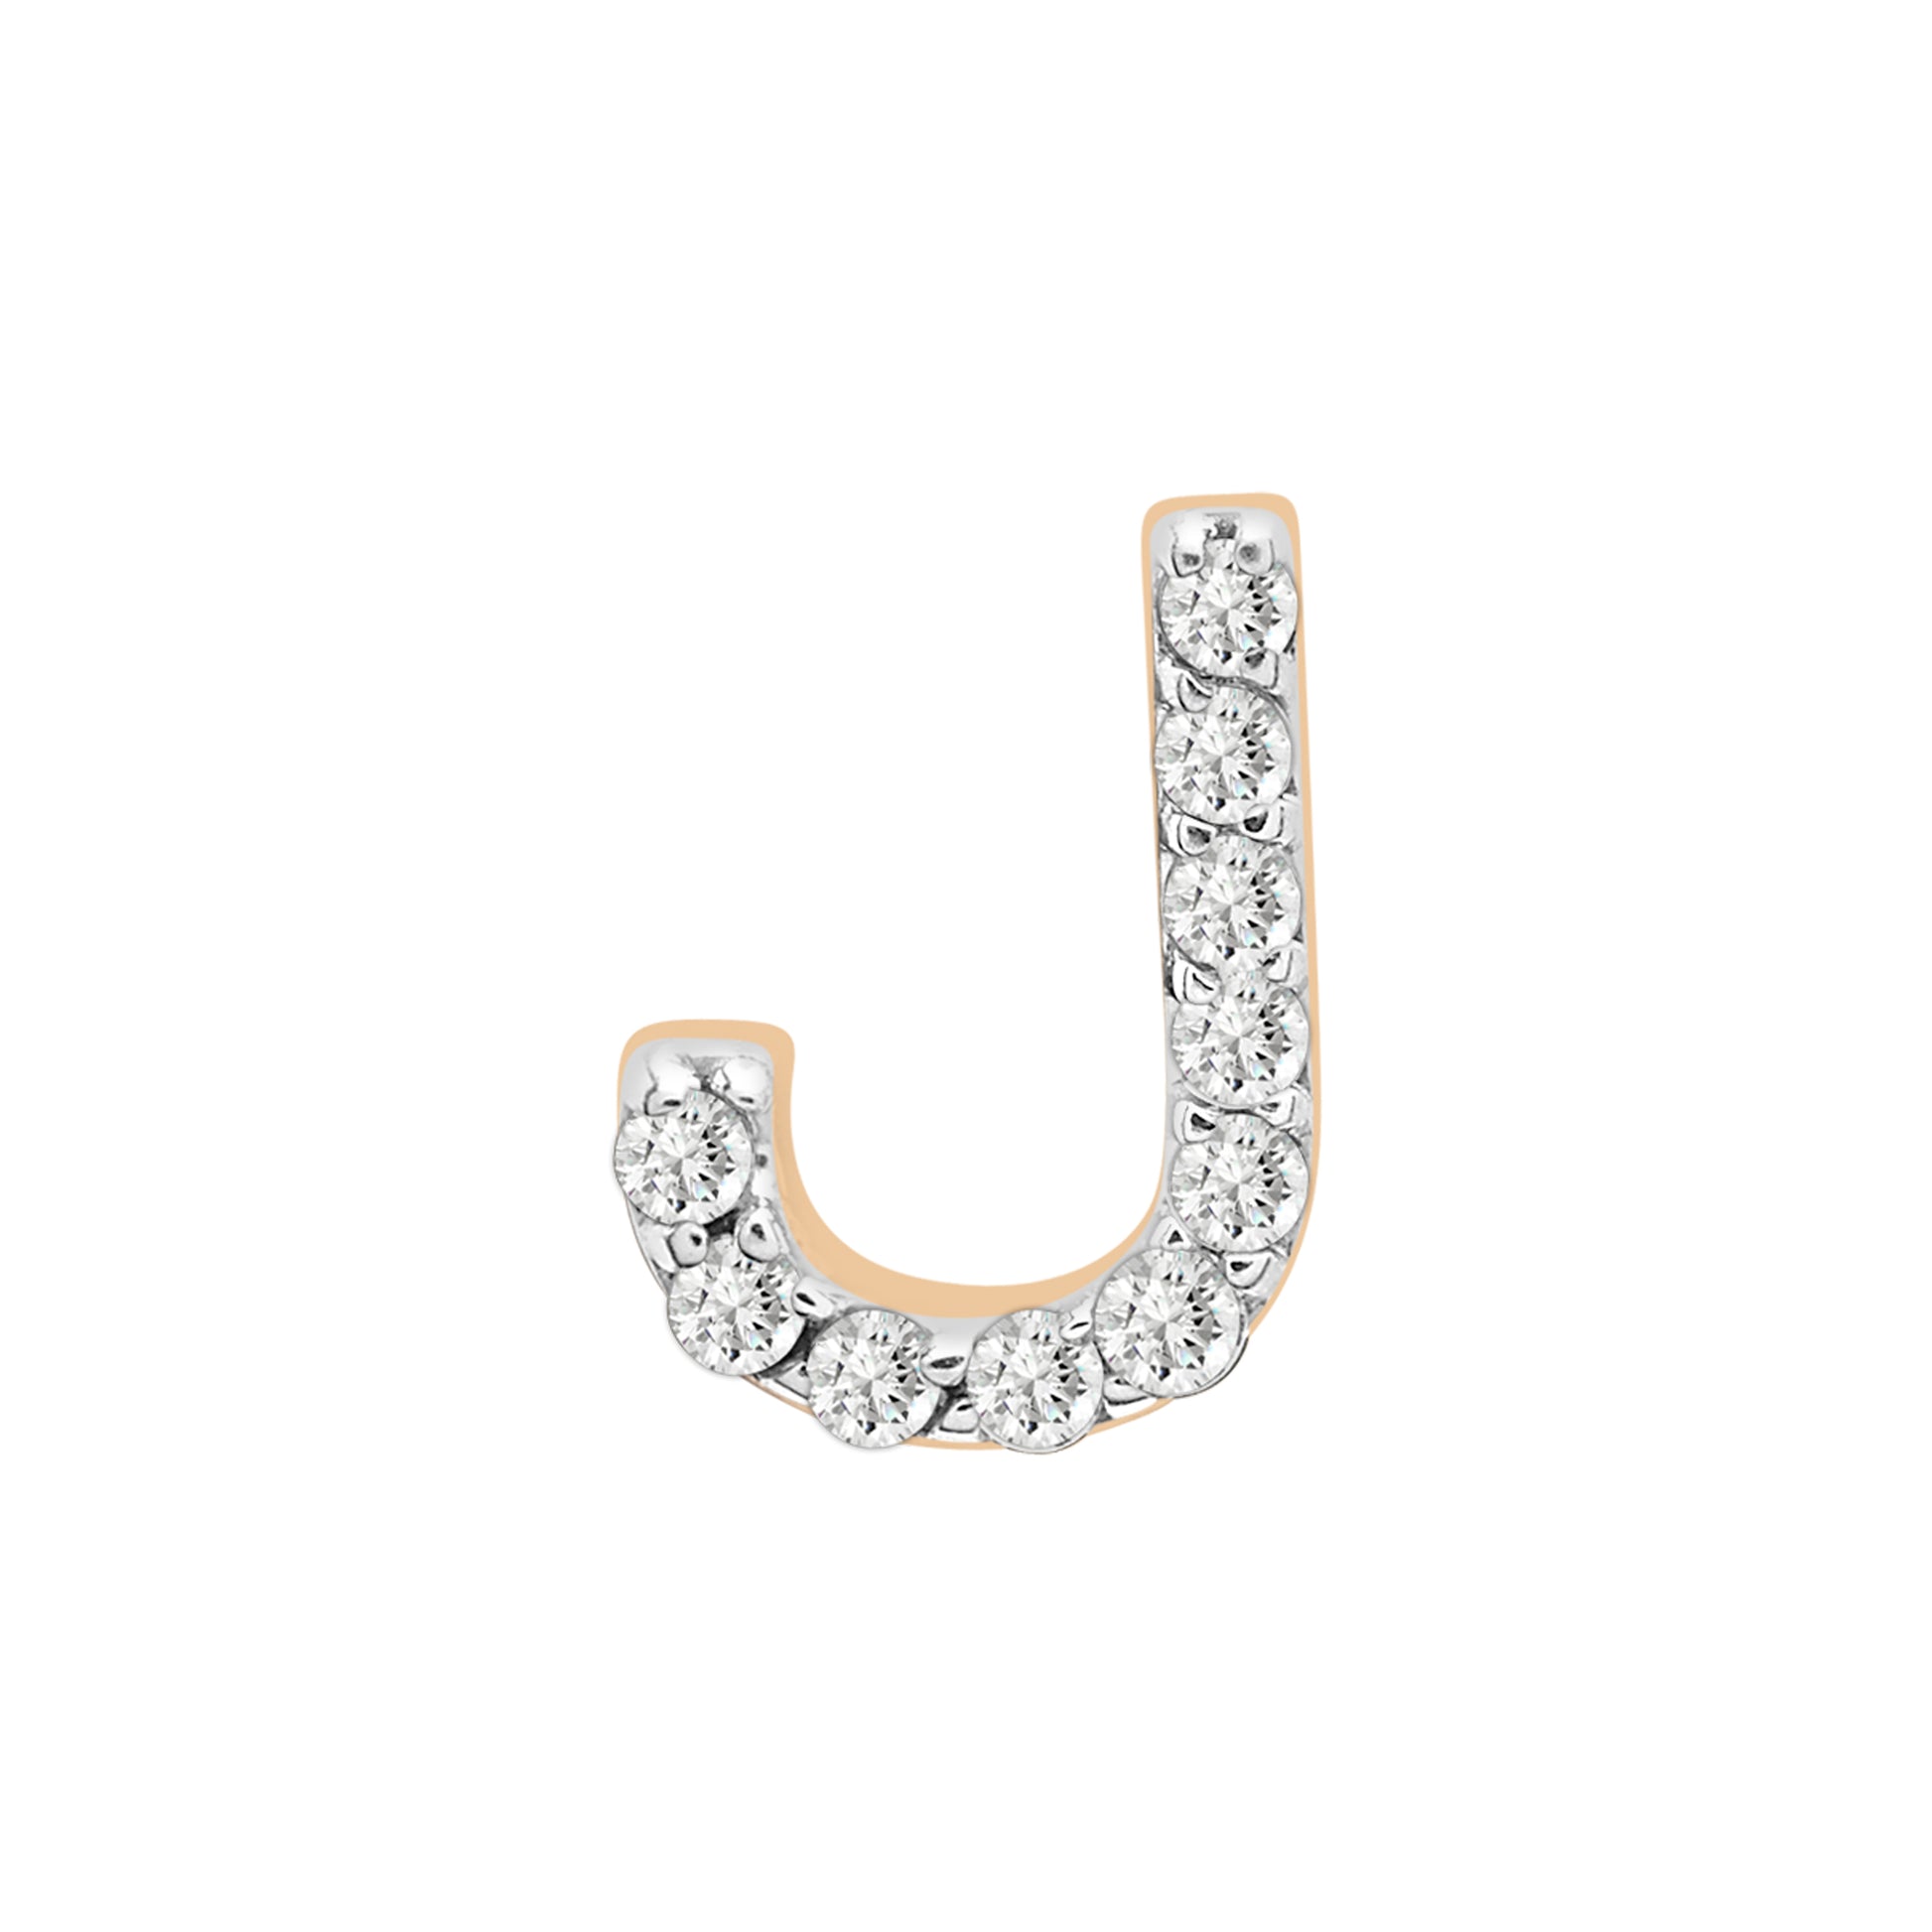 Single Initial Diamond Stud - J Earrings in Yellow Gold